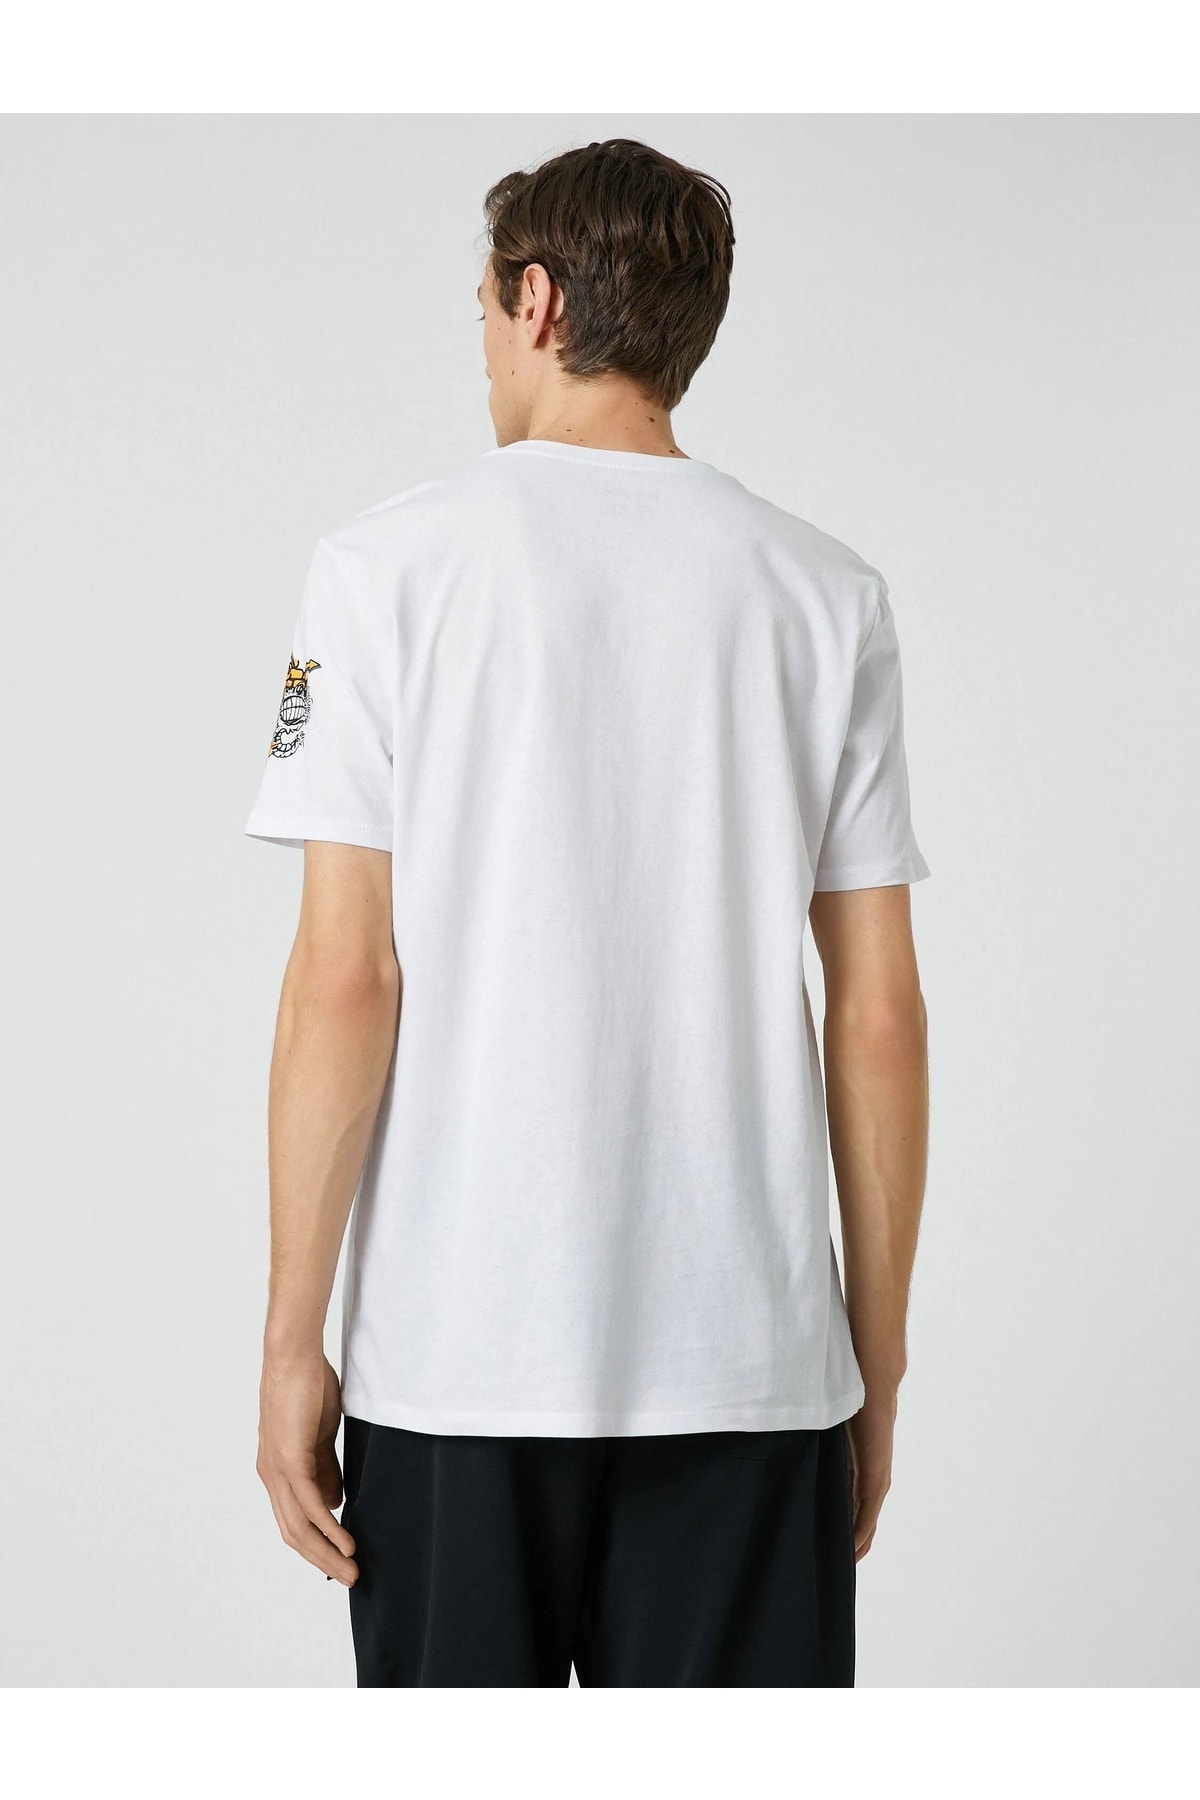 Koton Men's Clothing T-Shirt 3sam10038hk White